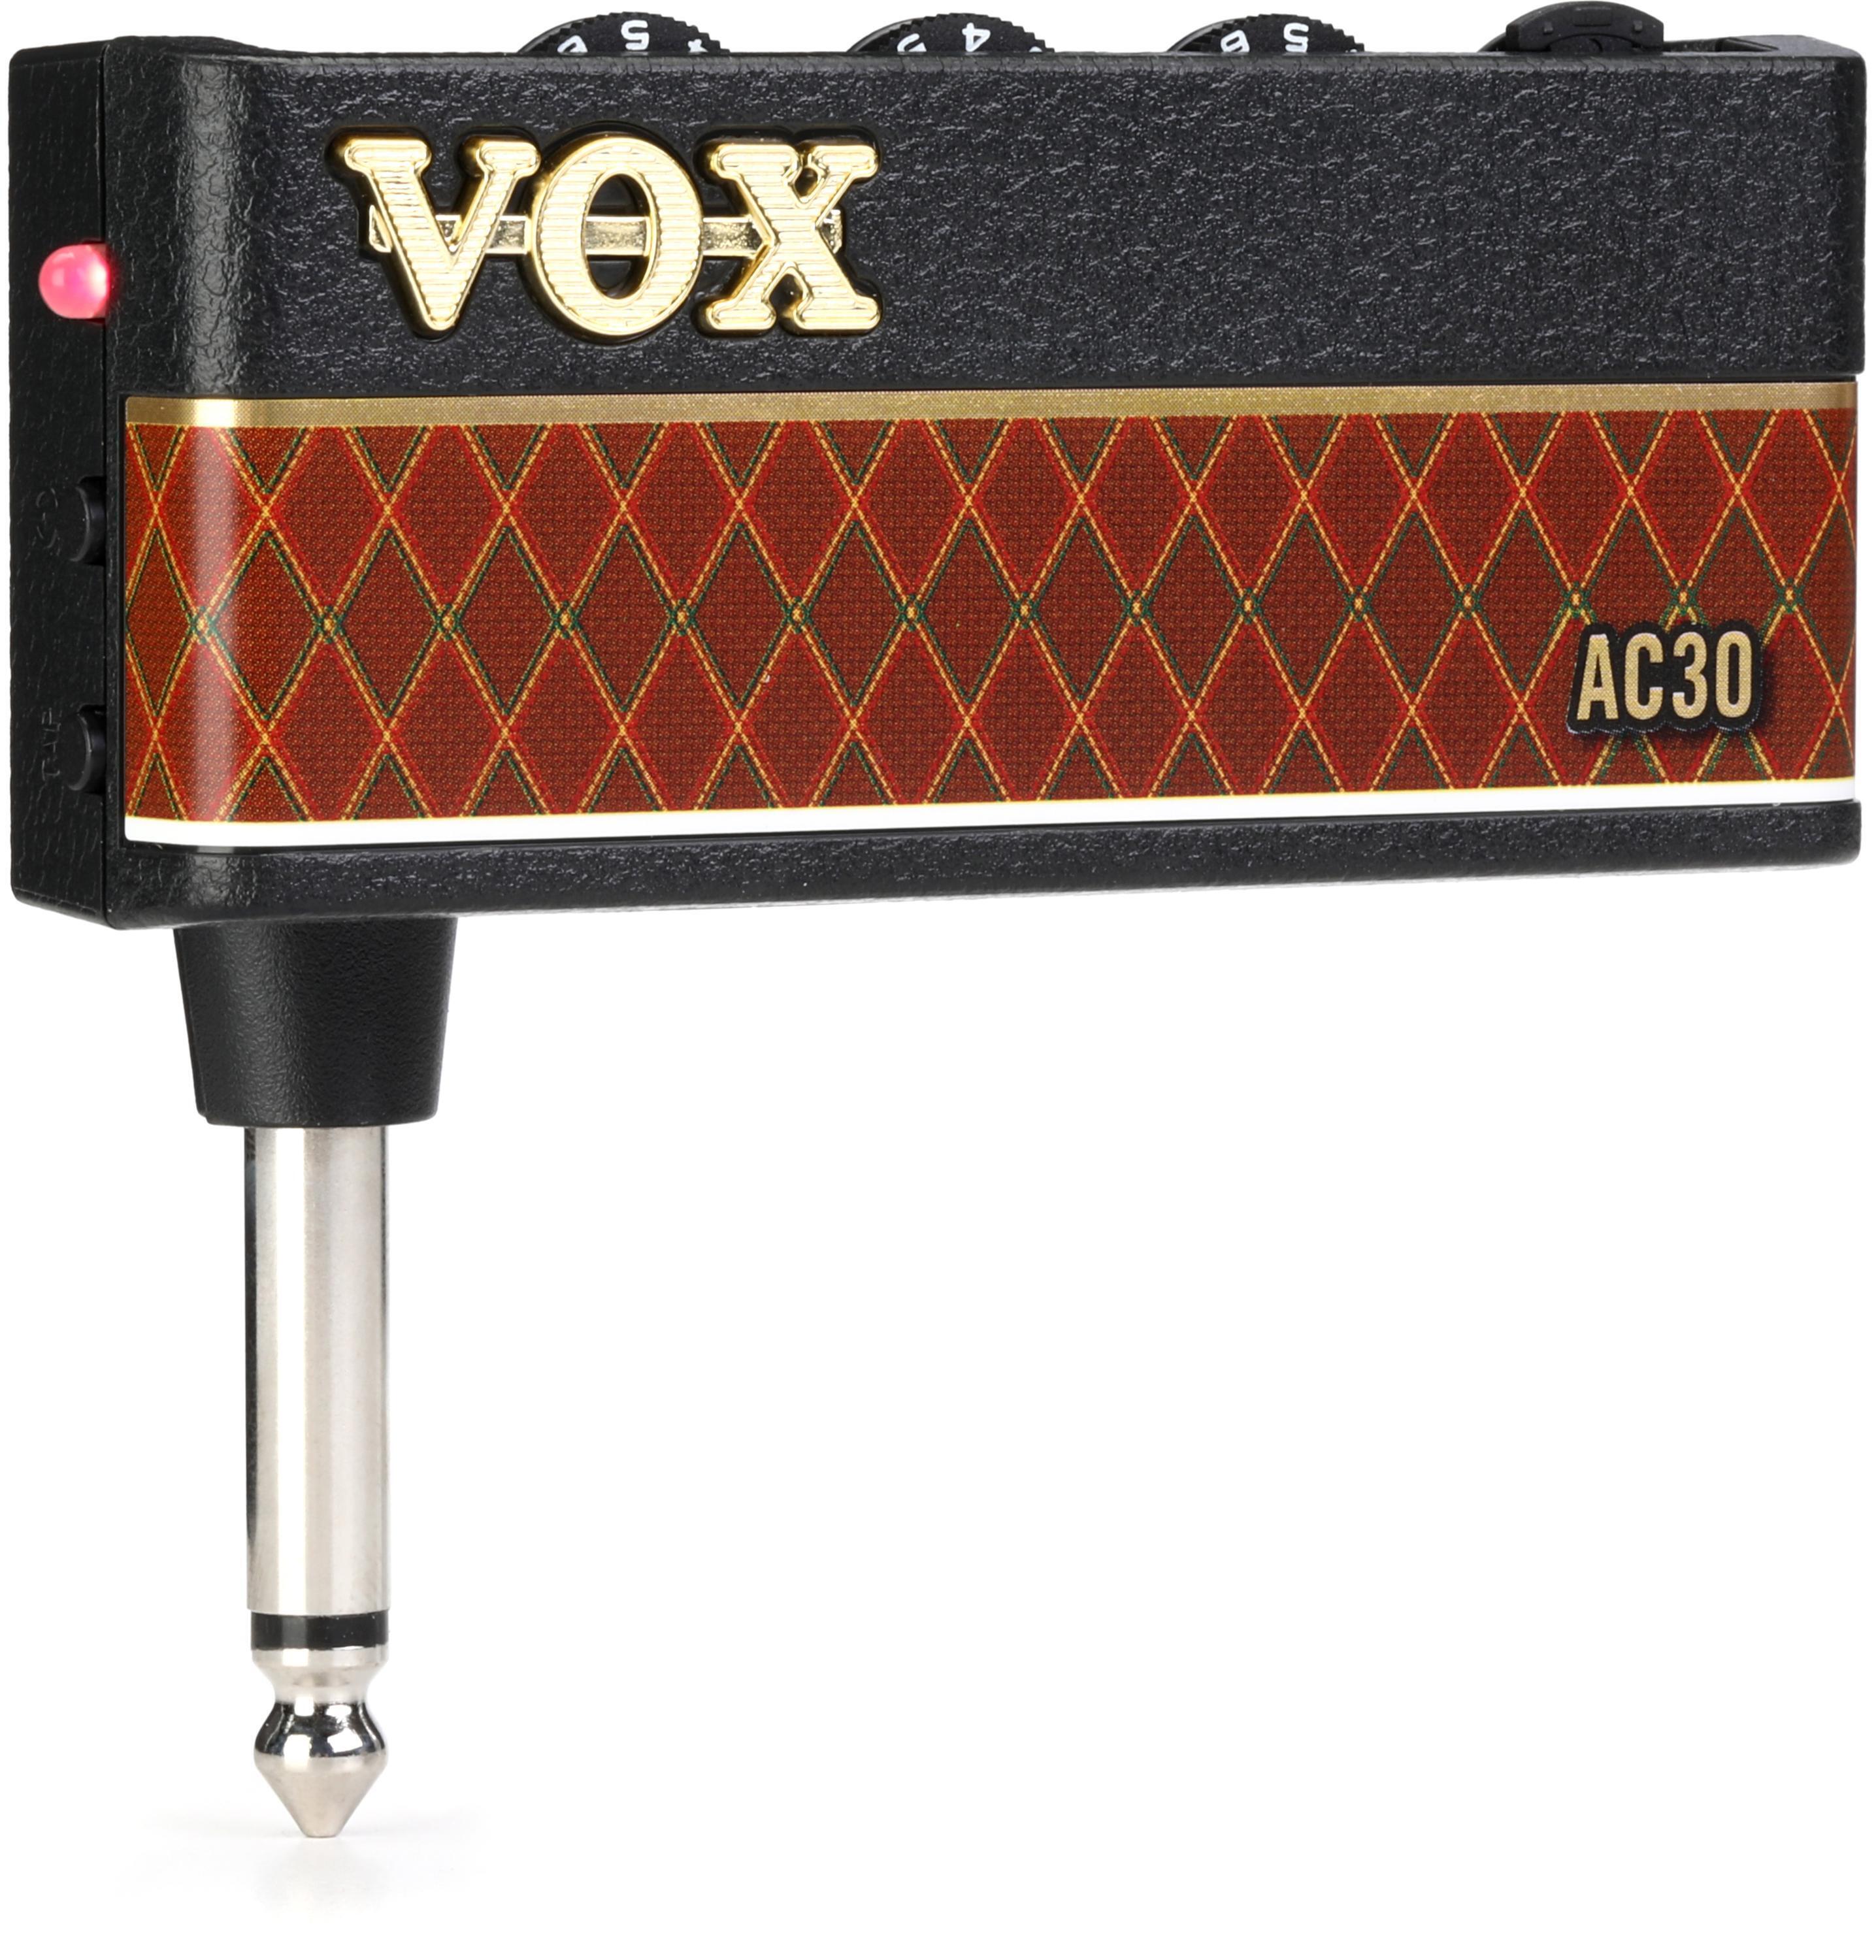 Bundled Item: Vox amPlug 3 AC30 Headphone Guitar Amp